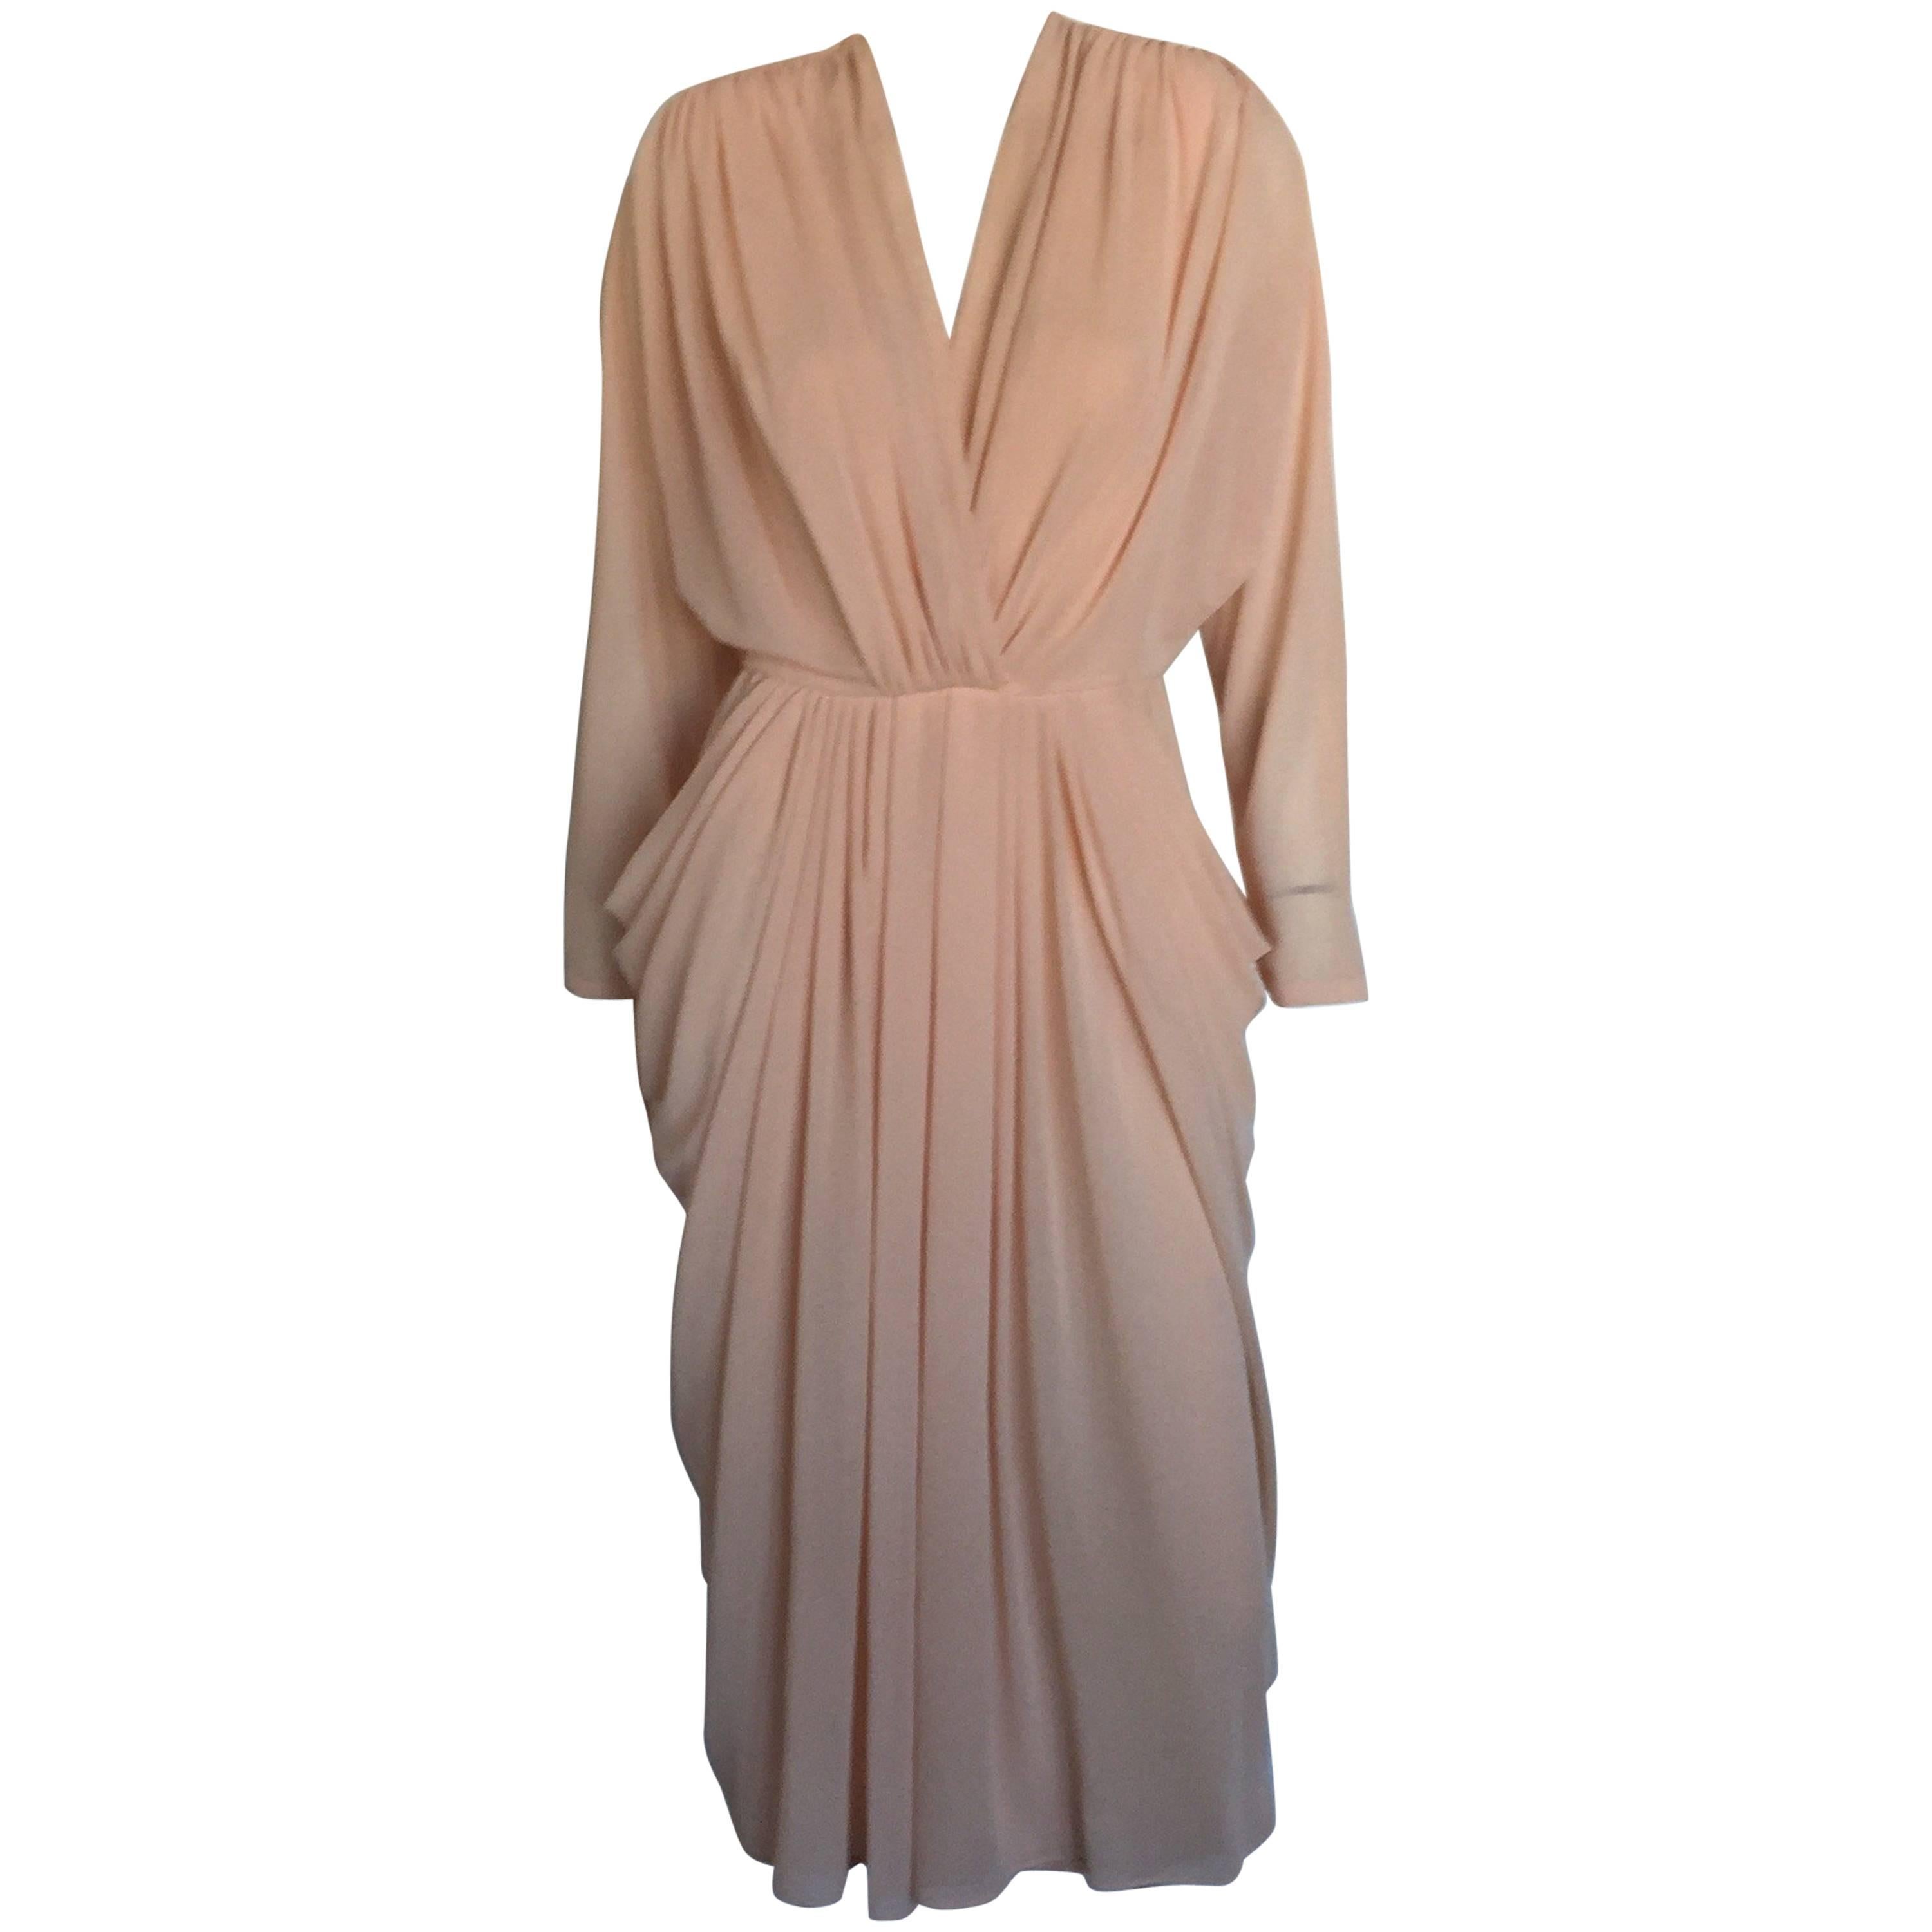 Lillie Rubin blush draped dress For Sale